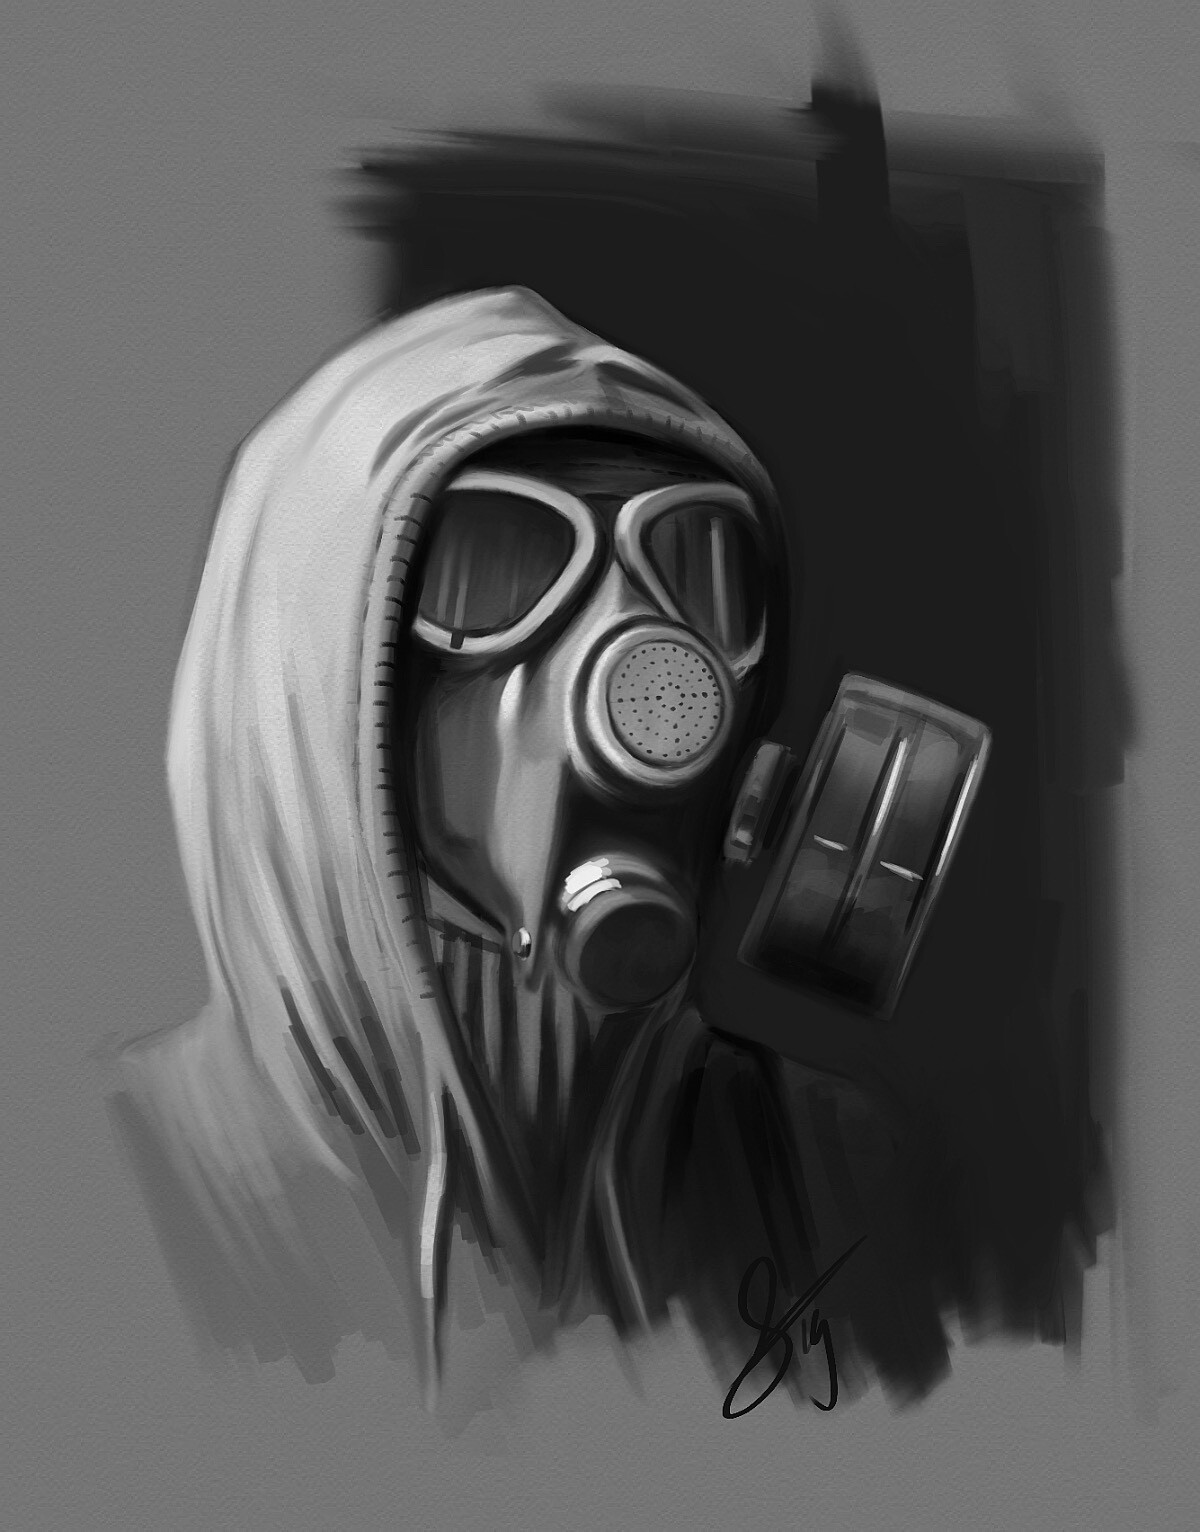 ArtStation  Sketch a Day May 2019  week 1  Gas masks